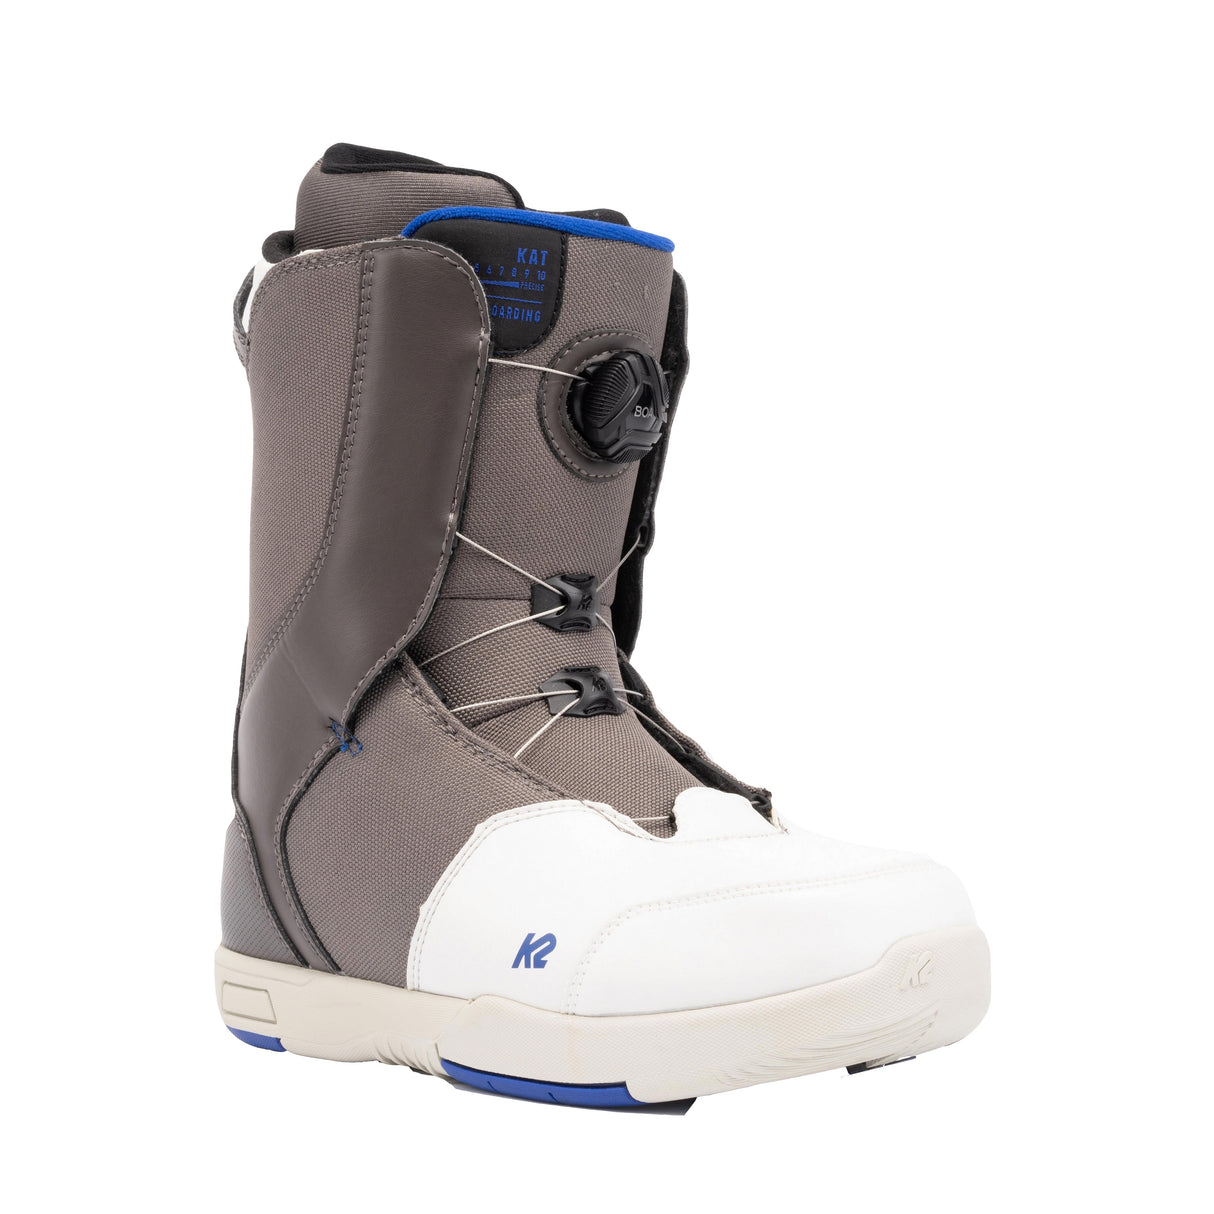 K2 2022 KAT Snowboard Boot